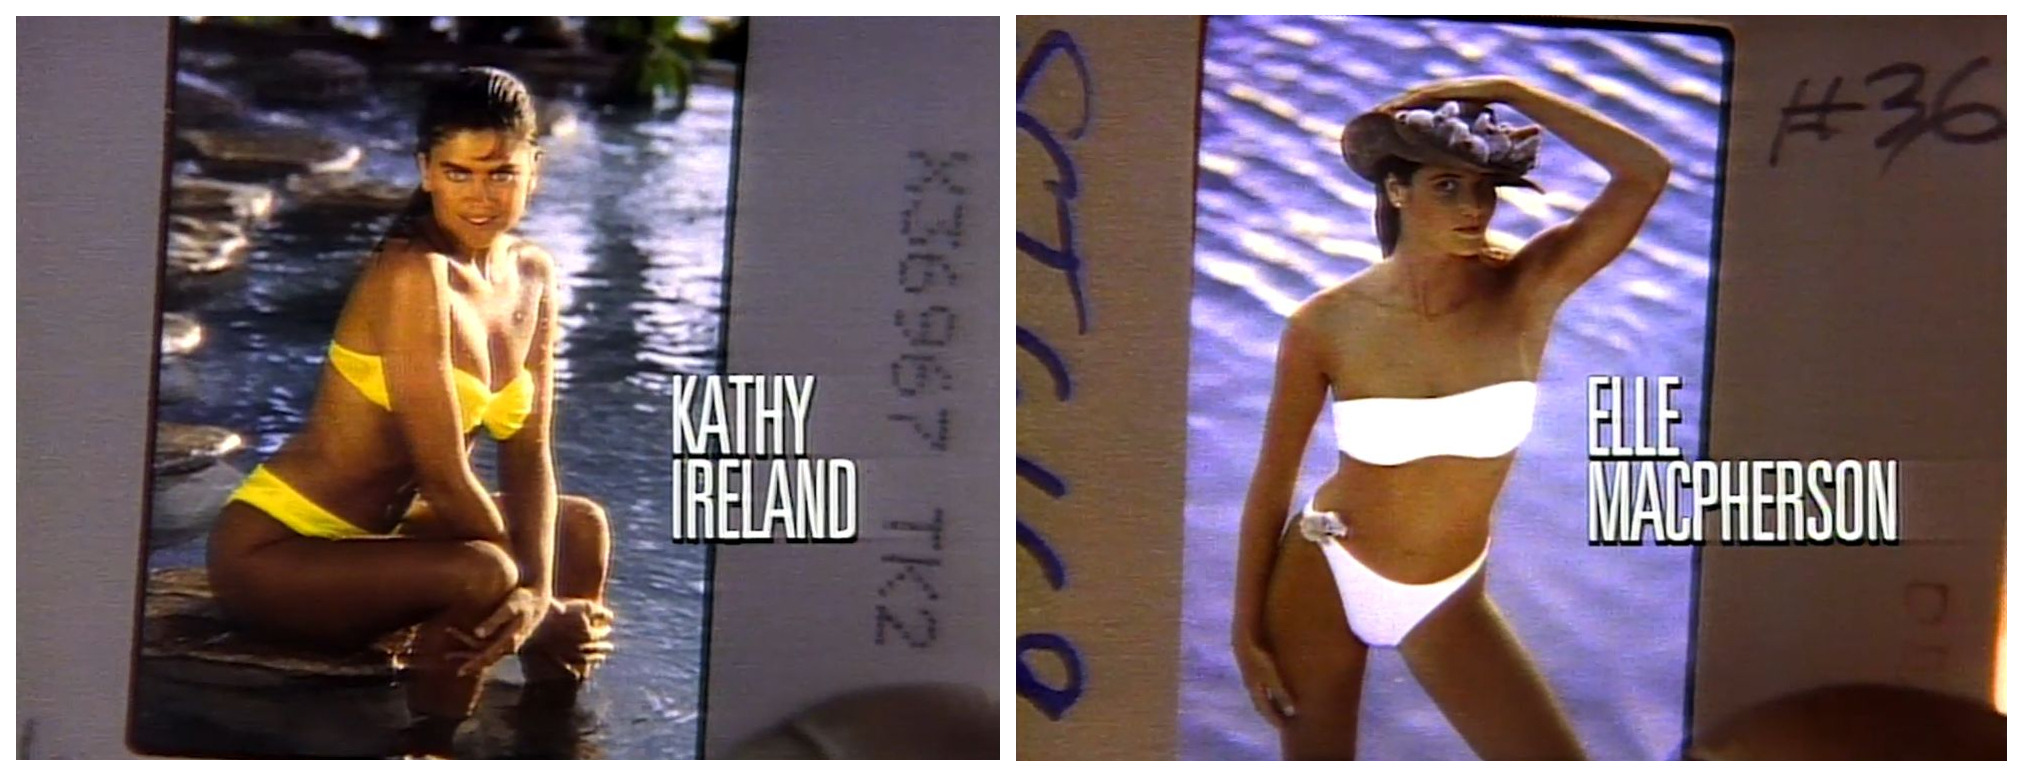 Kathy ireland 1989